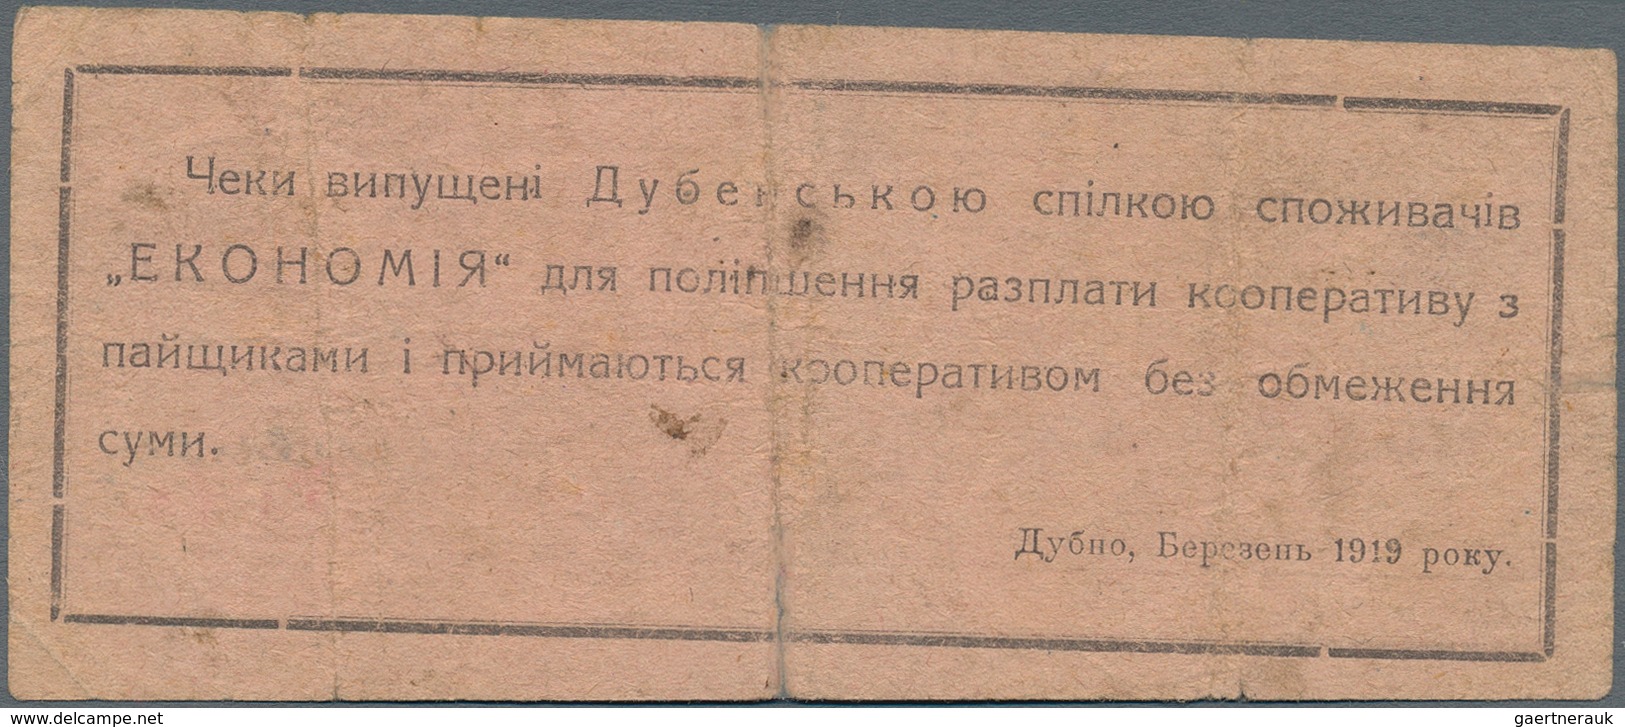 Ukraina / Ukraine: Check Of 5 Karbovantsiv 1919, P.NL (R 14238), Still Nice With Taped Tear At Upper - Ukraine